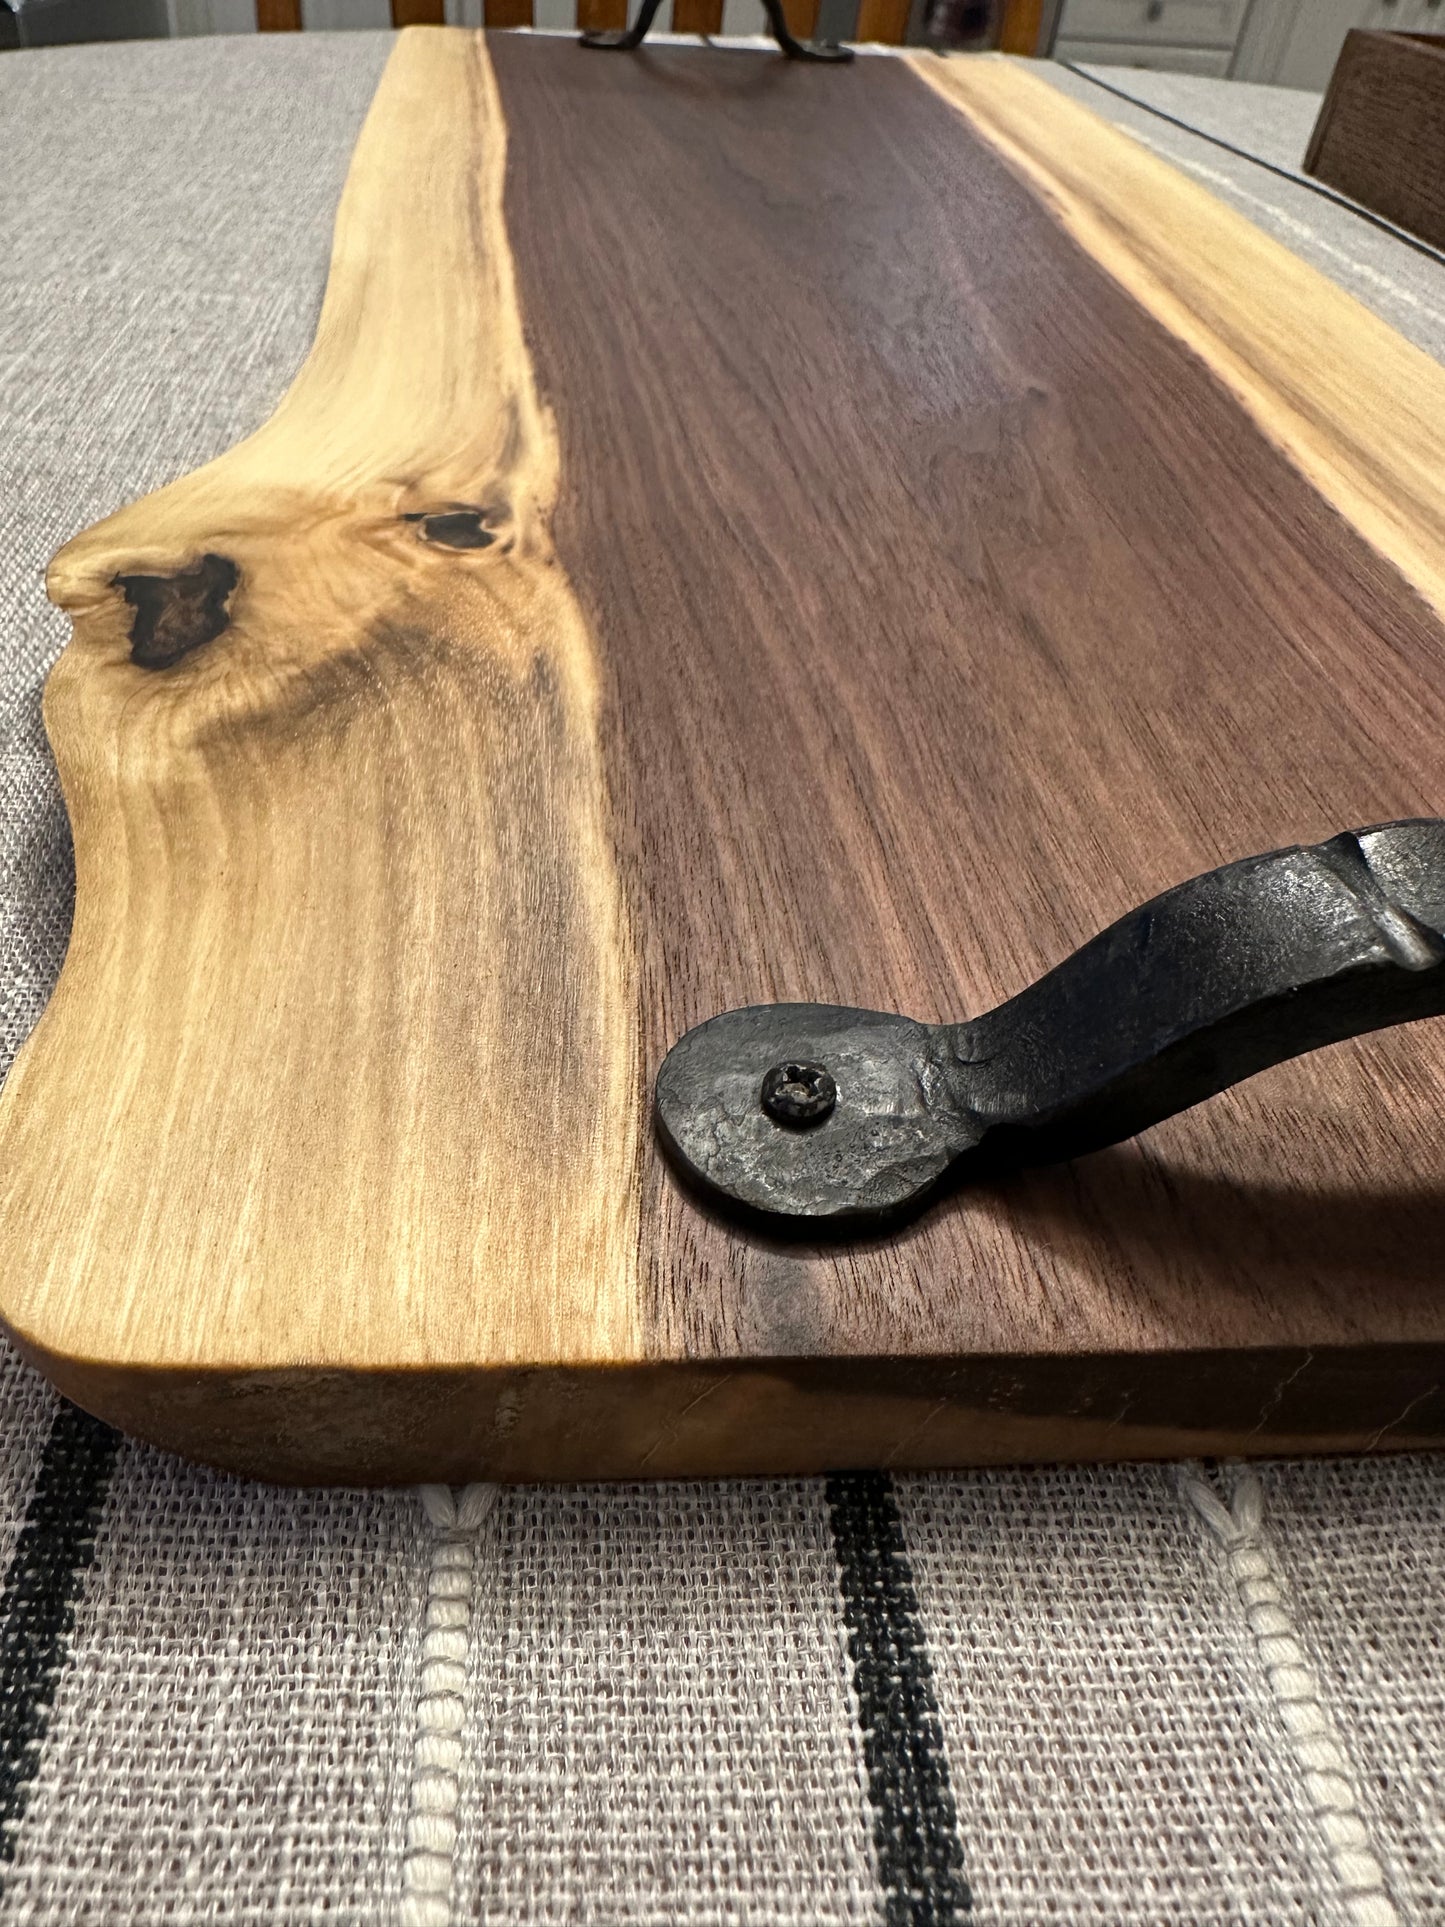 Walnut live edge tray with handles